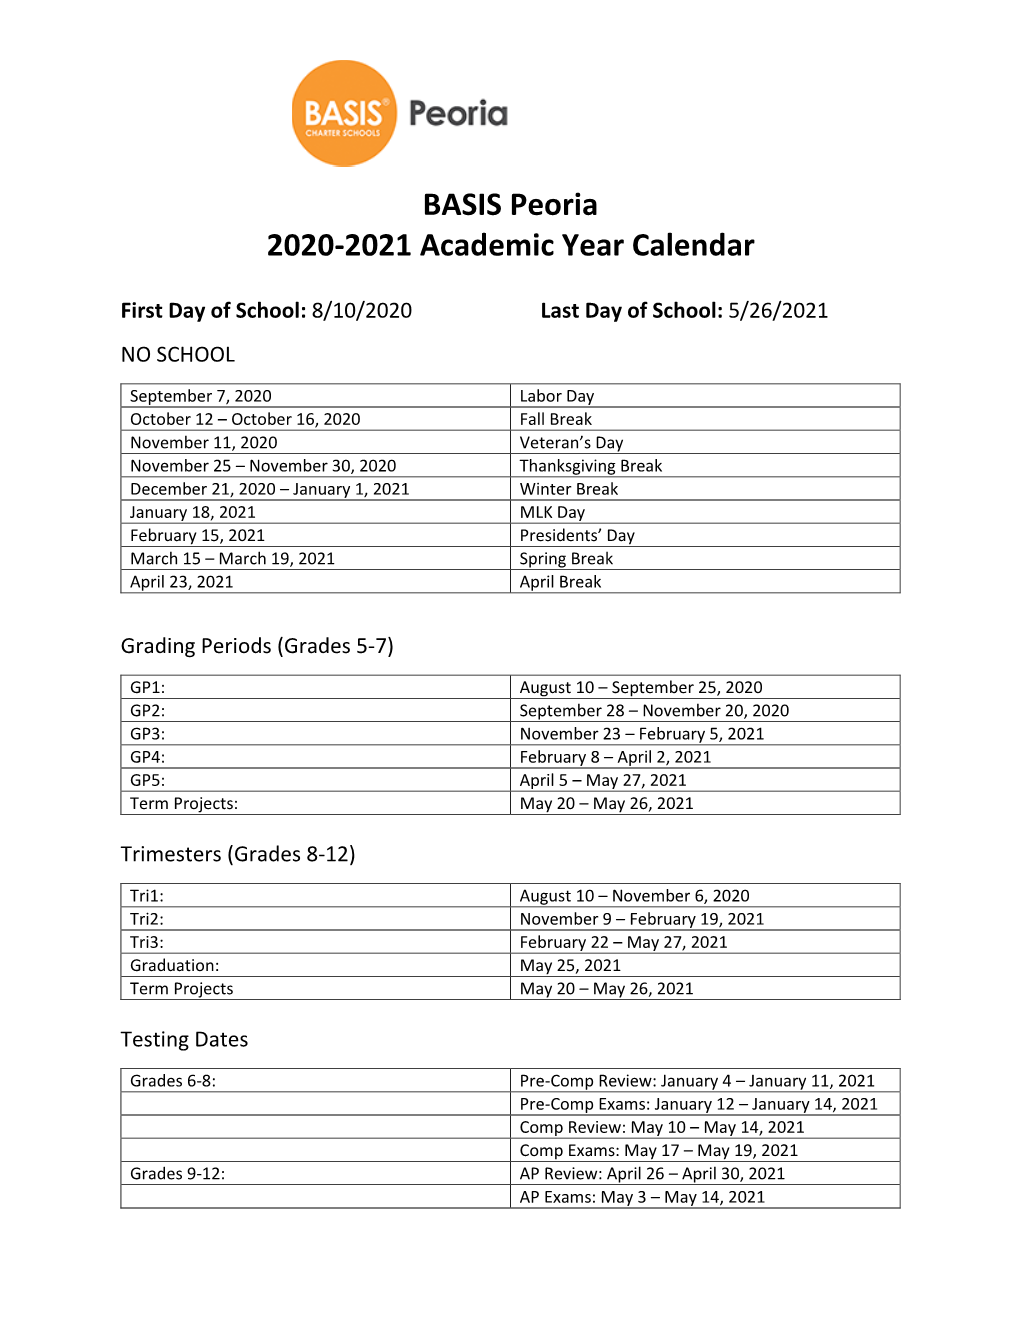 BASIS Peoria School Calendar